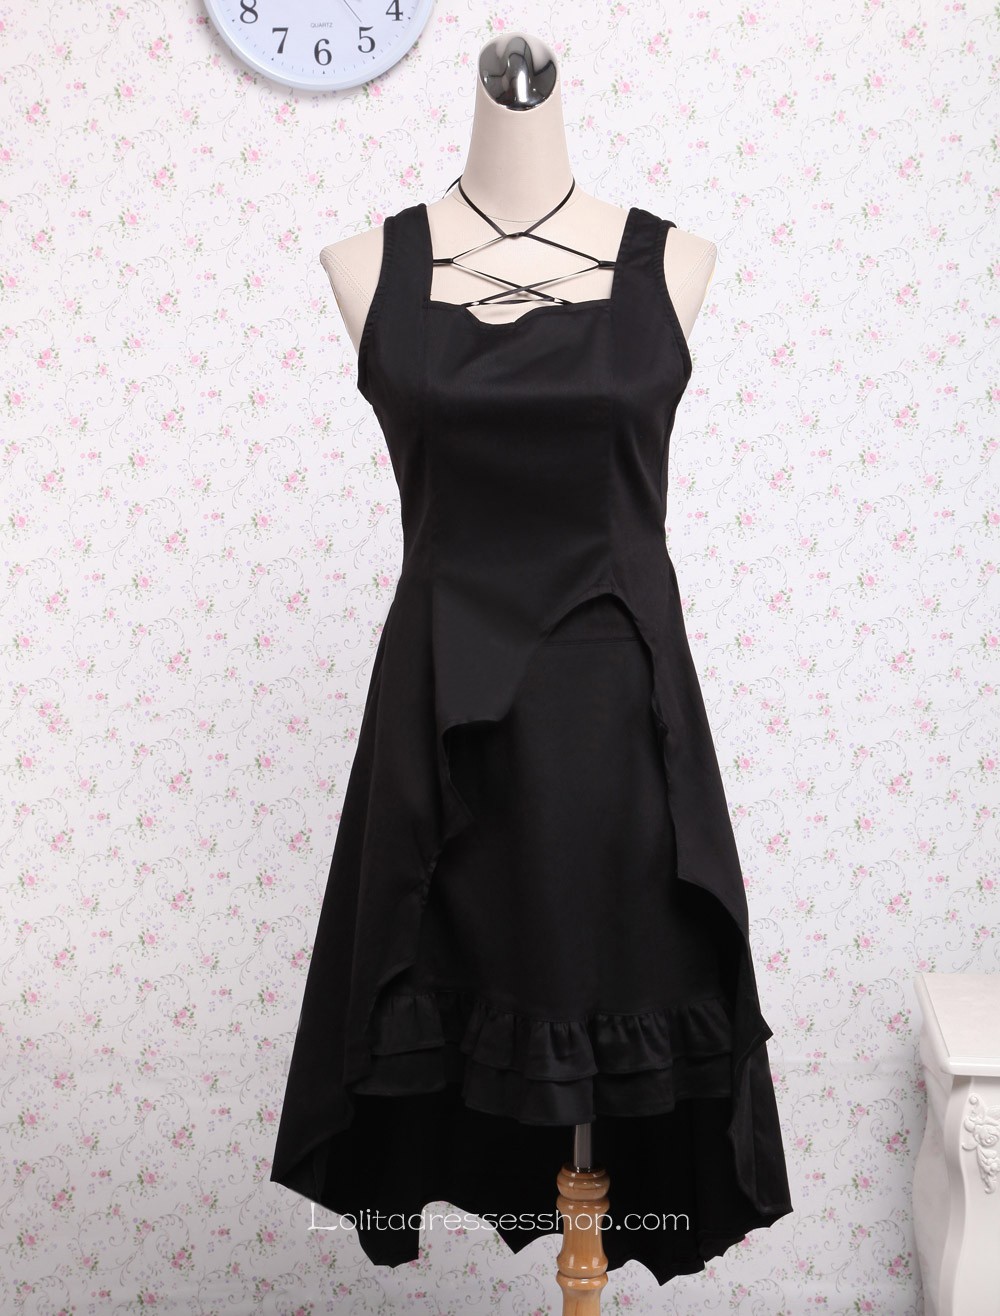 Black Cotton Square Neck Ruffled Gothic Lolita Dress